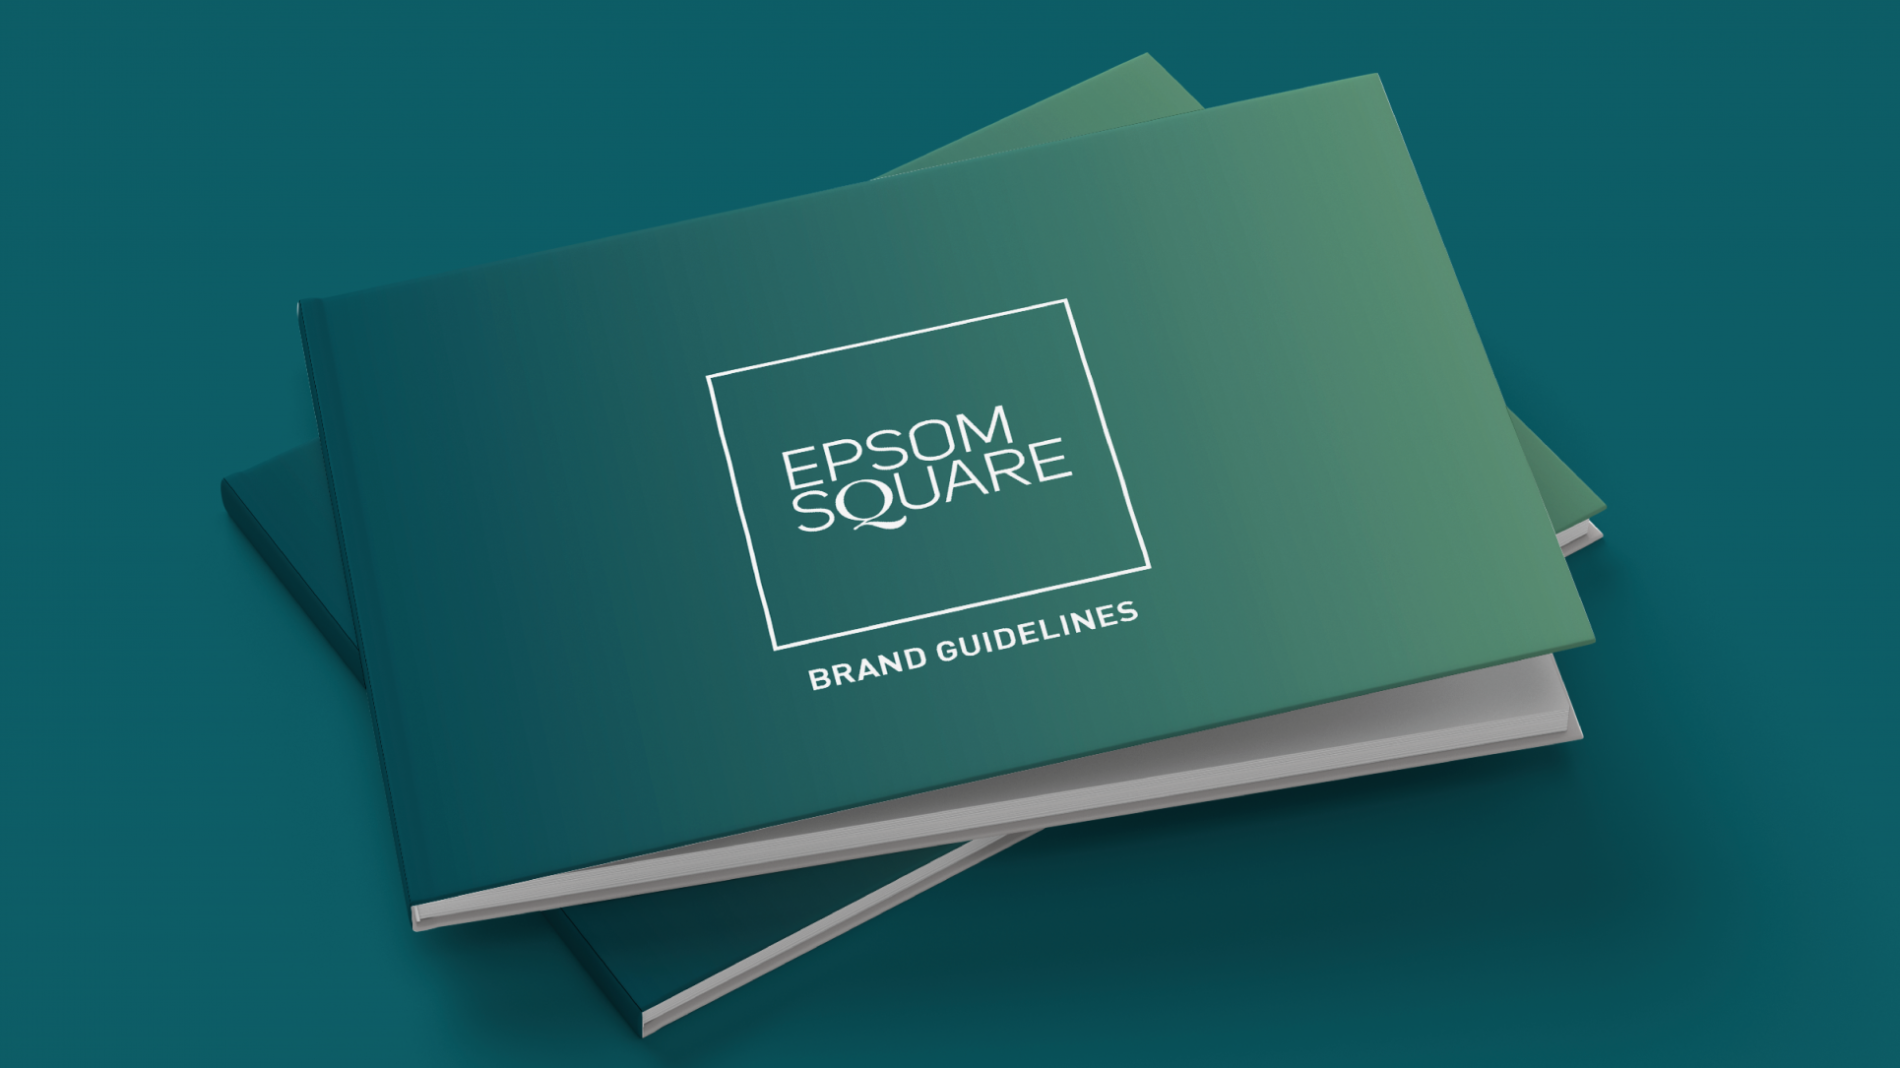 Epsom Square shopping centre brand guidelines cover